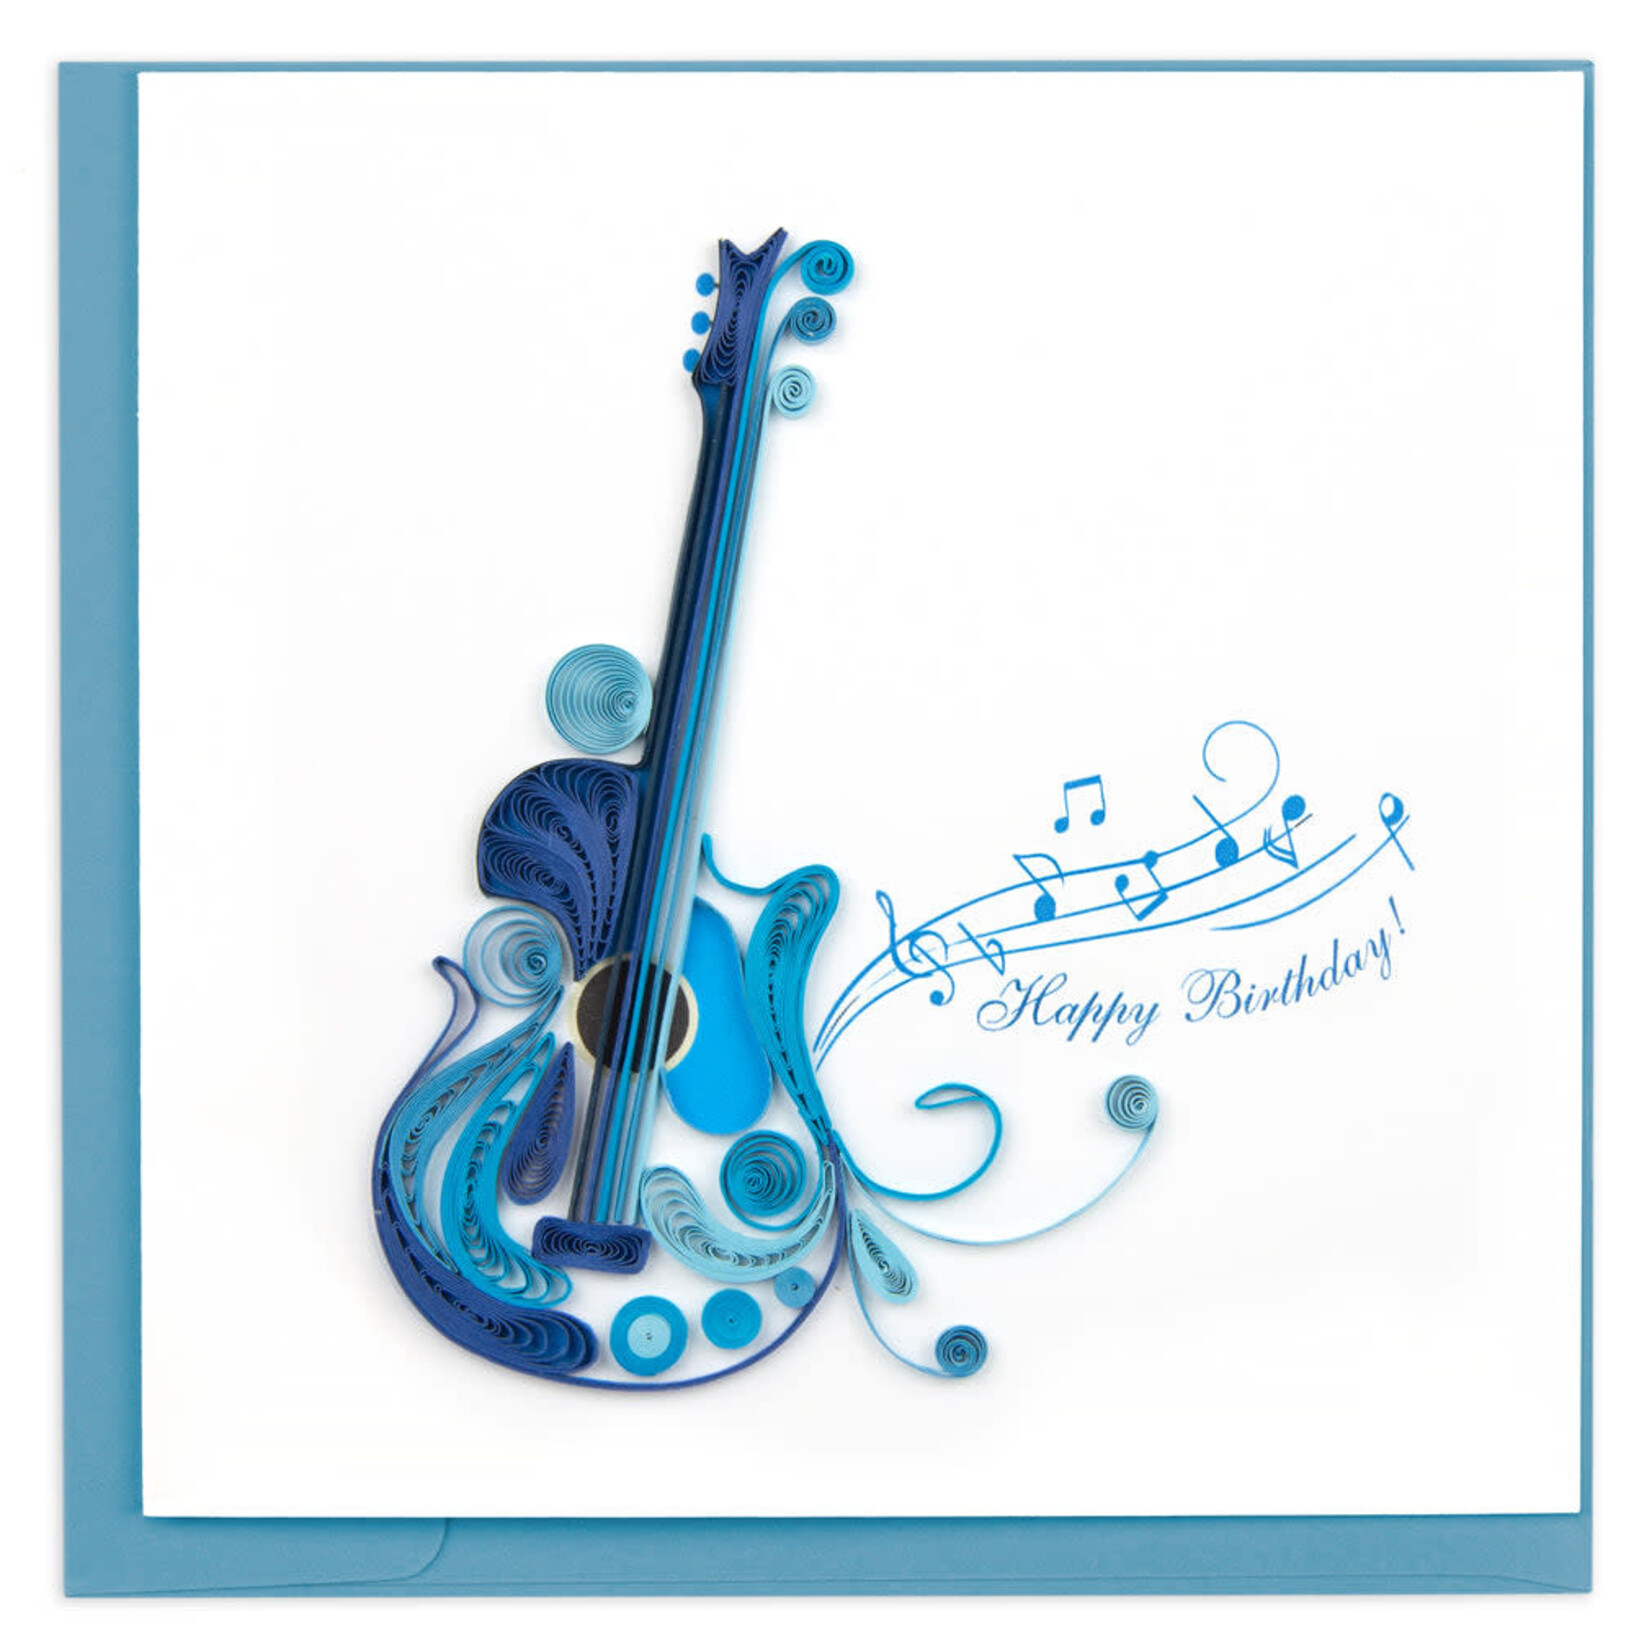 Kalyn Birthday Guitar Quilling Card, Vietnam